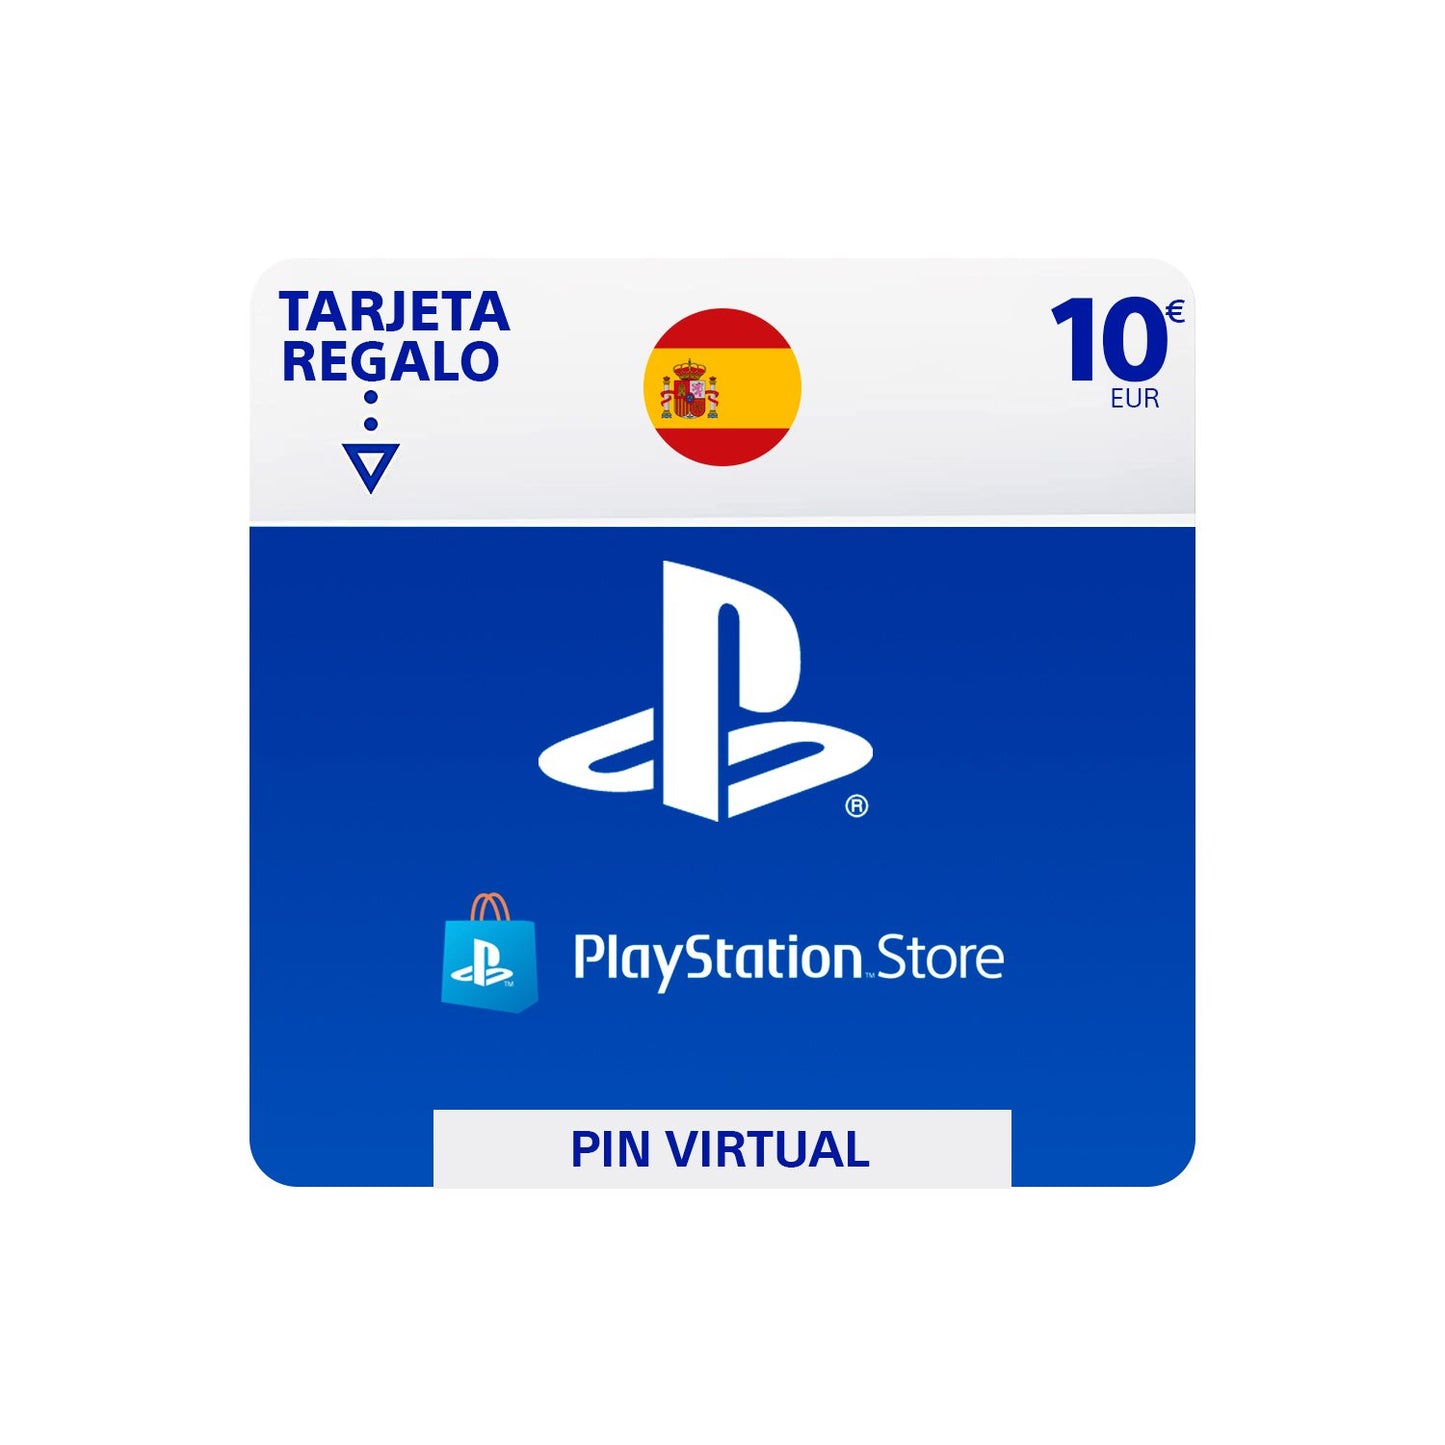 10€ PlayStation Store Tarjeta Regalo